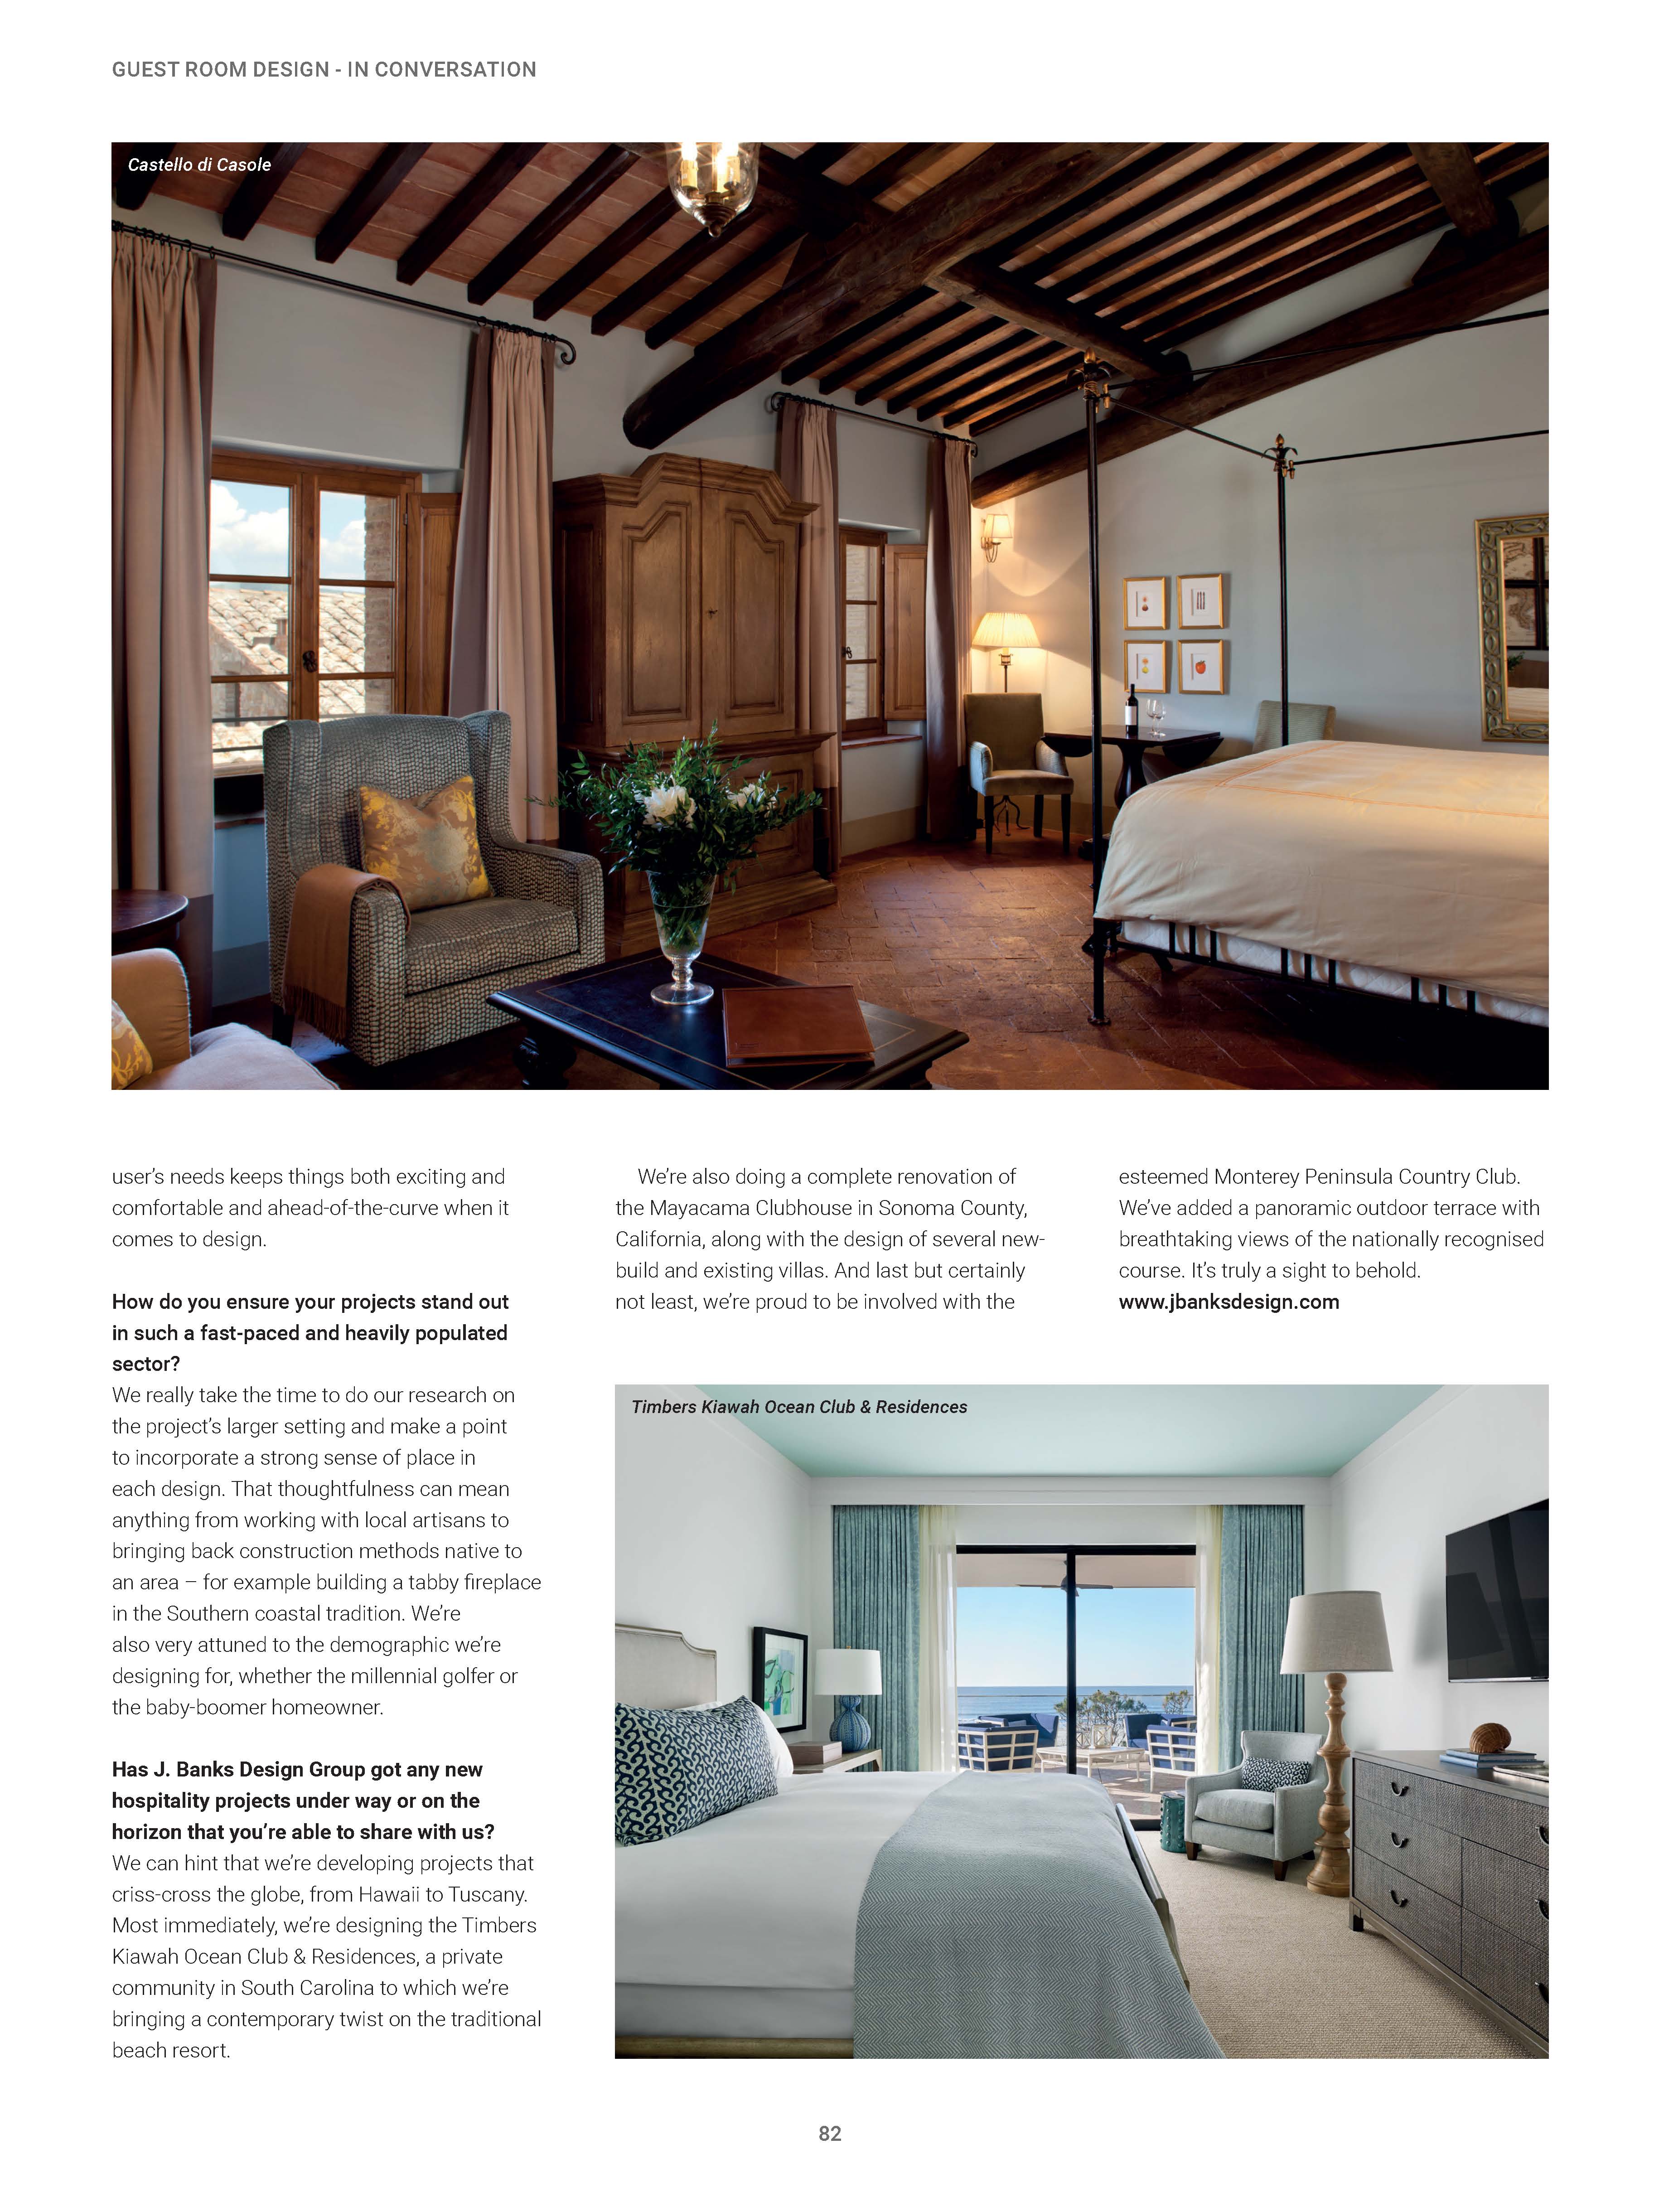 Hospitality Interiors features Joni Vanderslice of J Banks Design talking about Timbers Kiawah Design Details